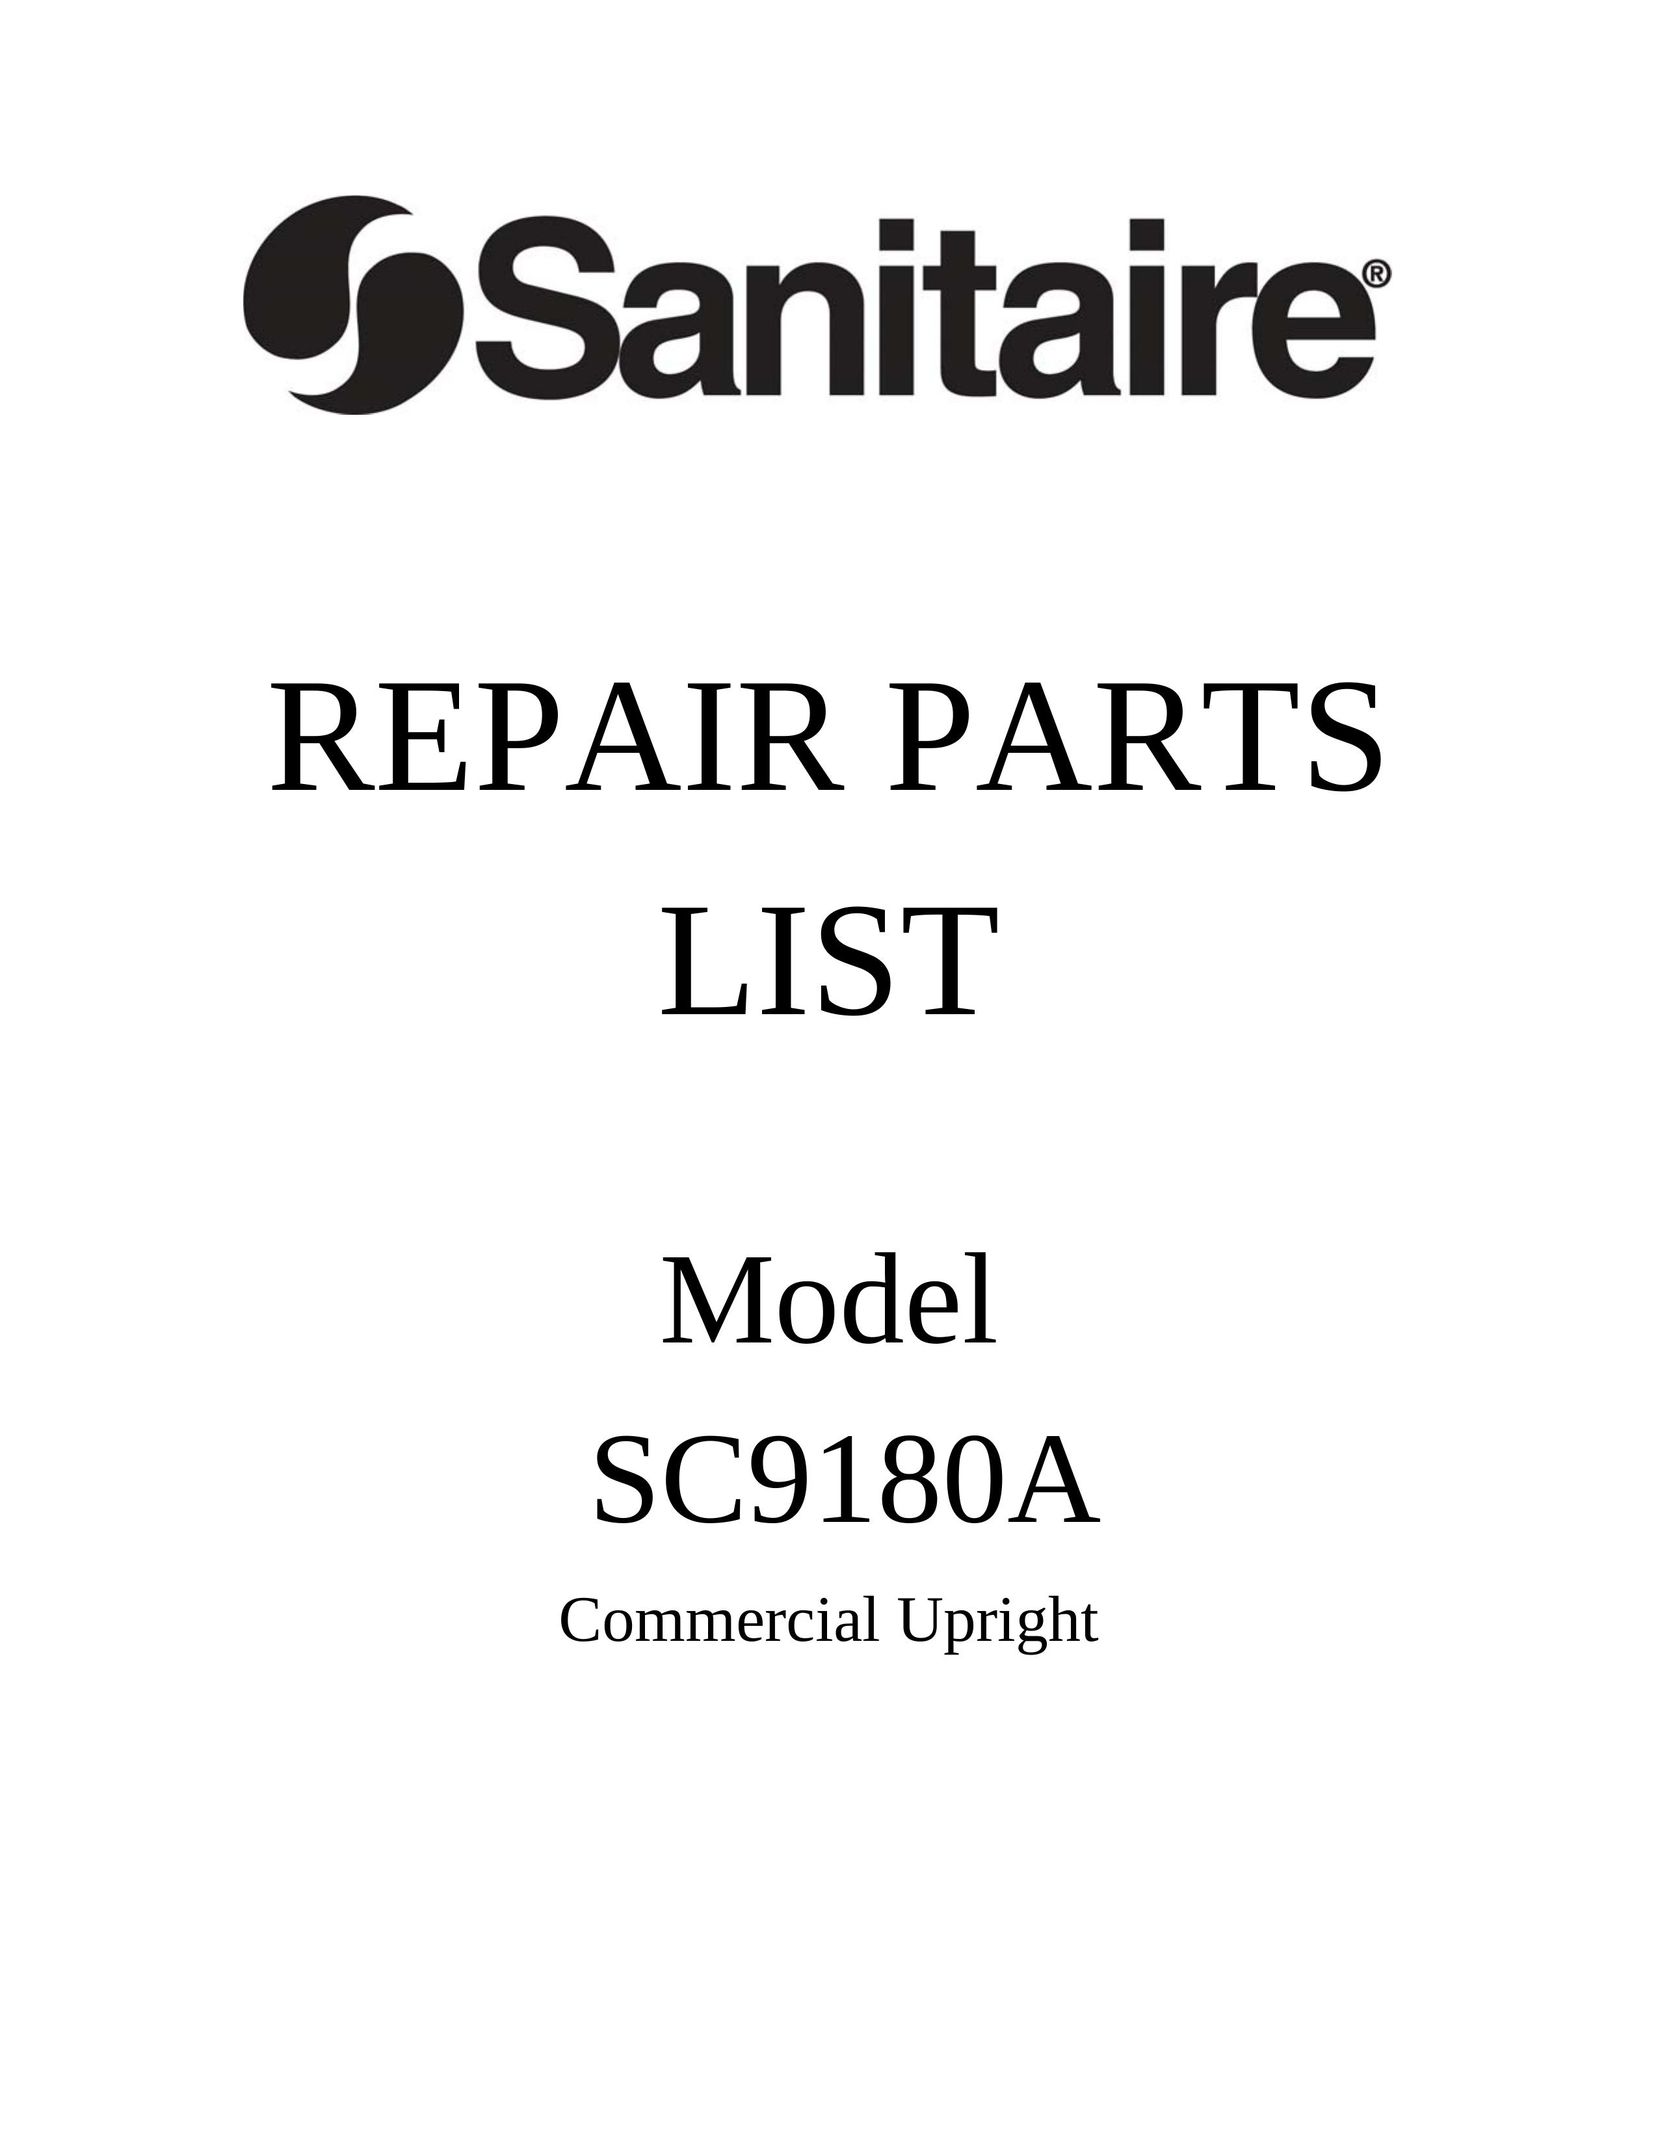 Sanitaire SC9180A Vacuum Cleaner User Manual